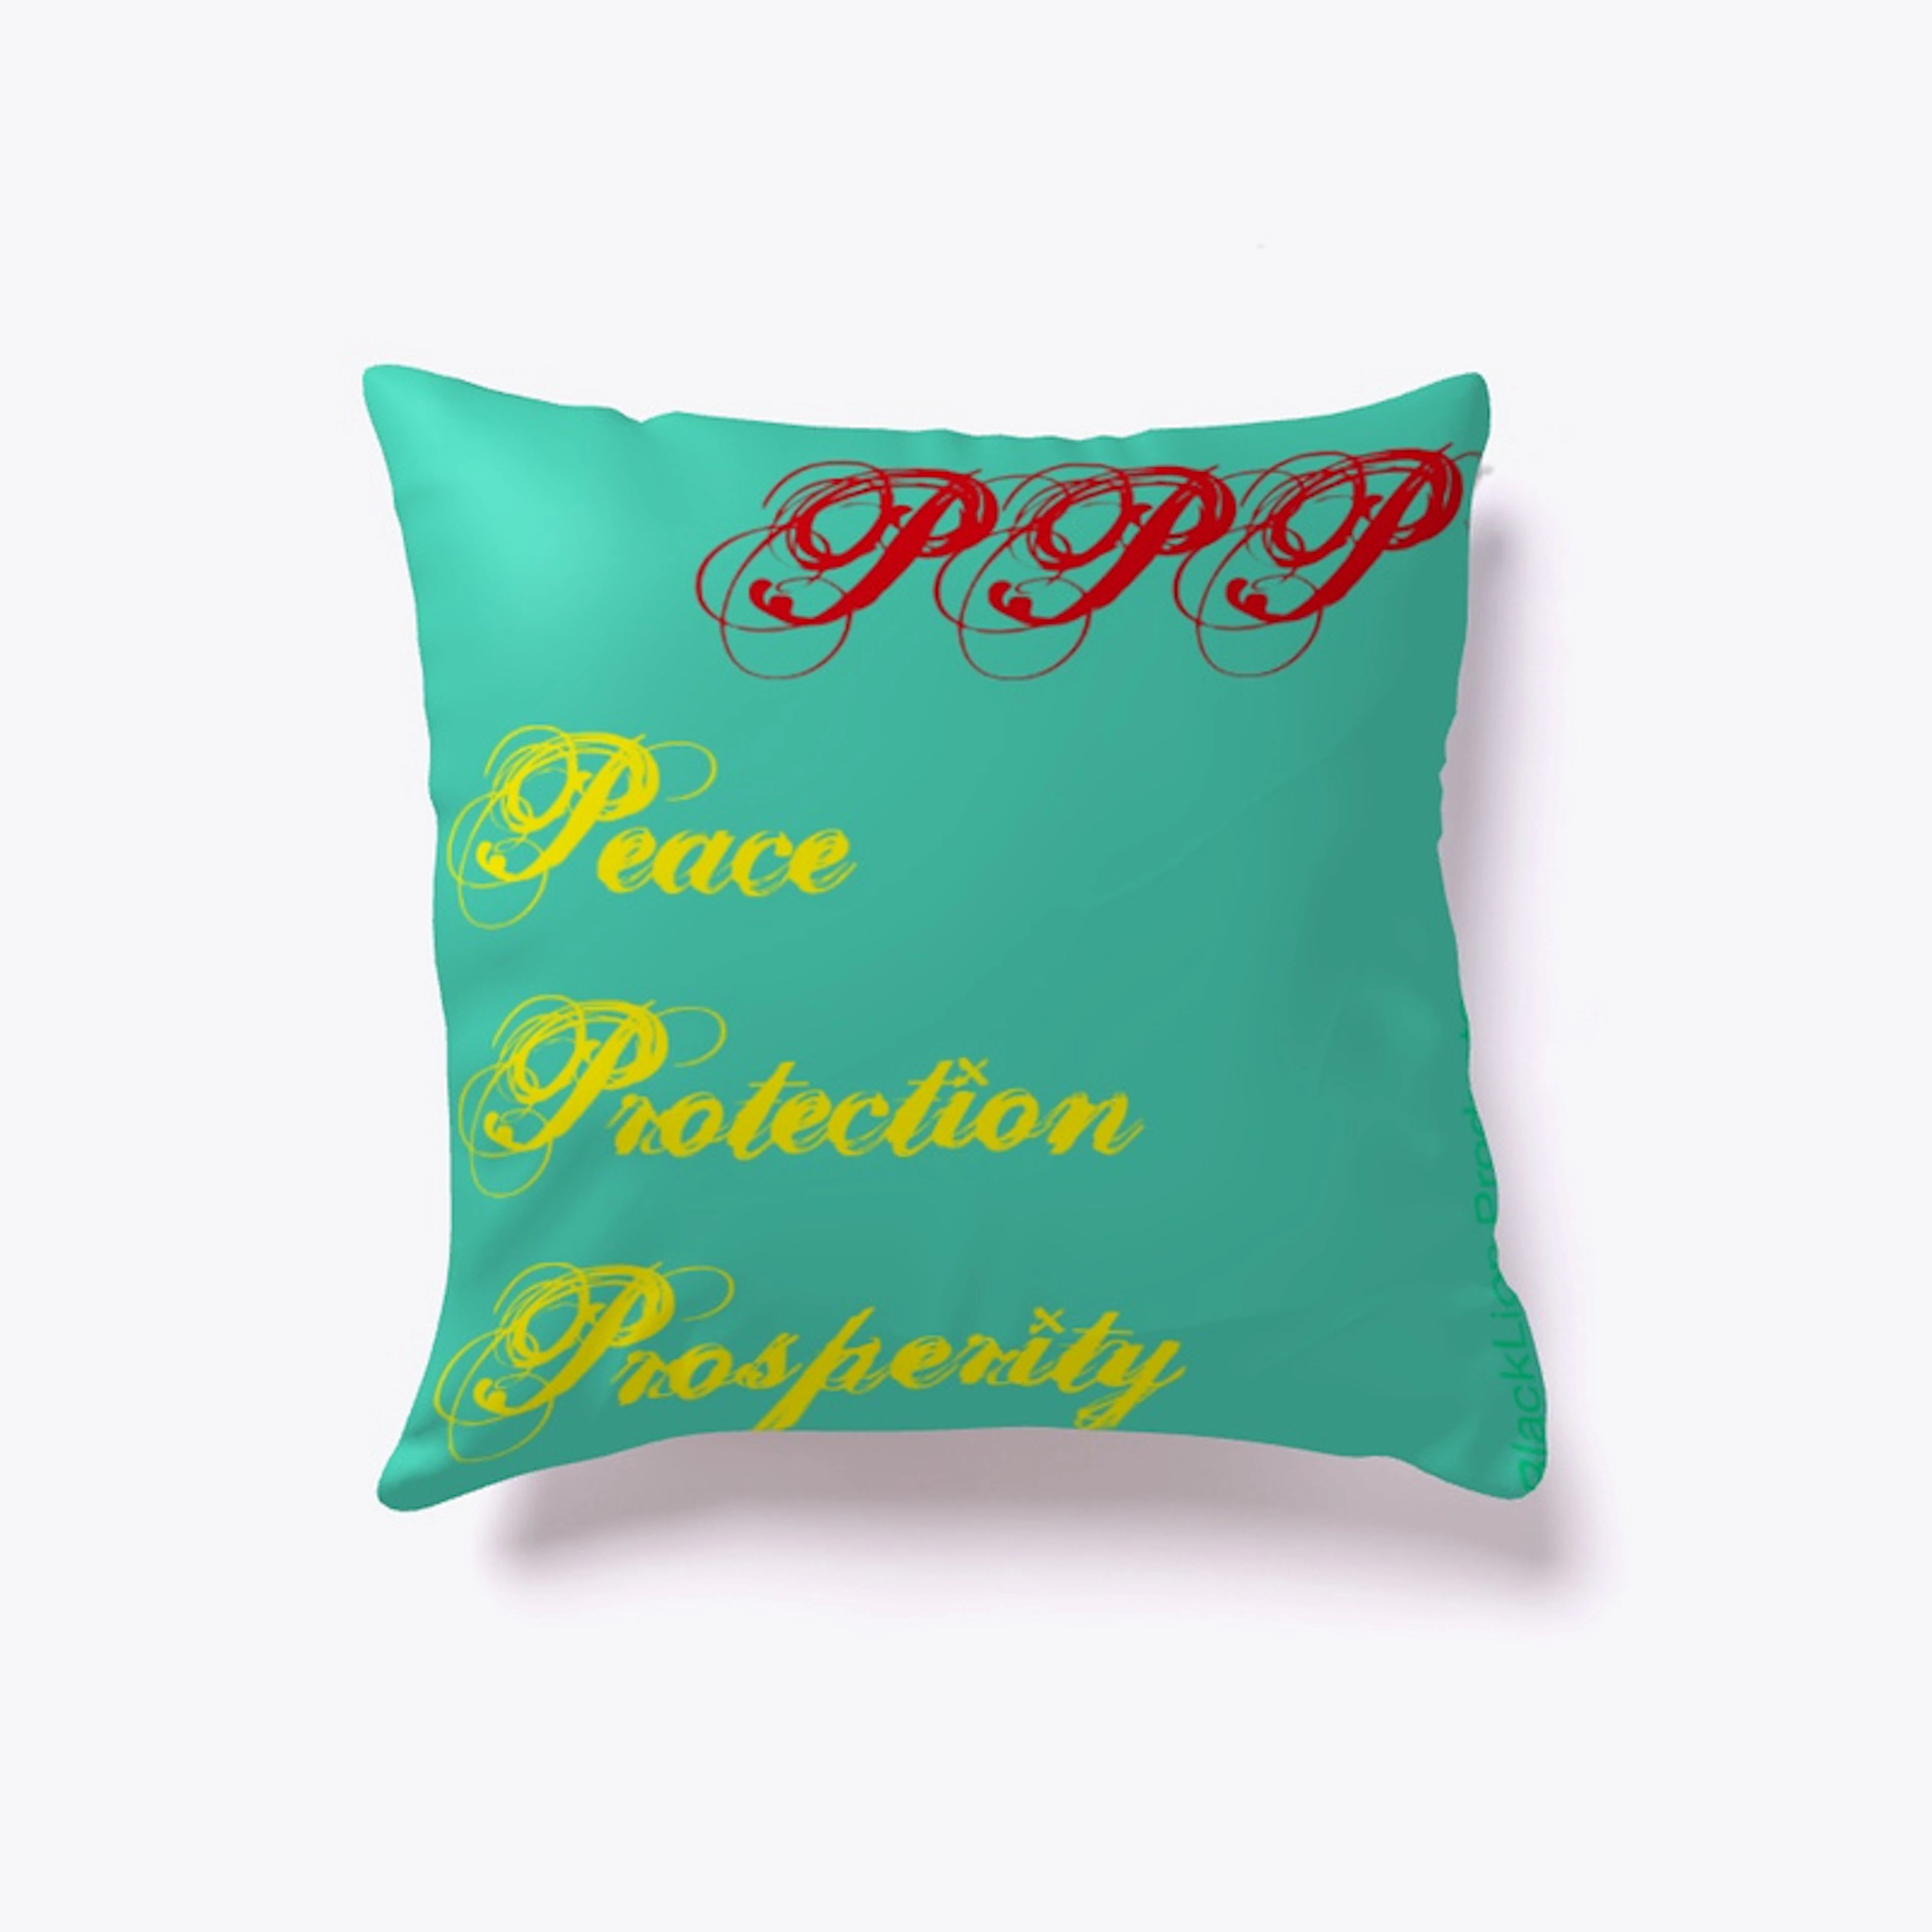 PPP Pillow